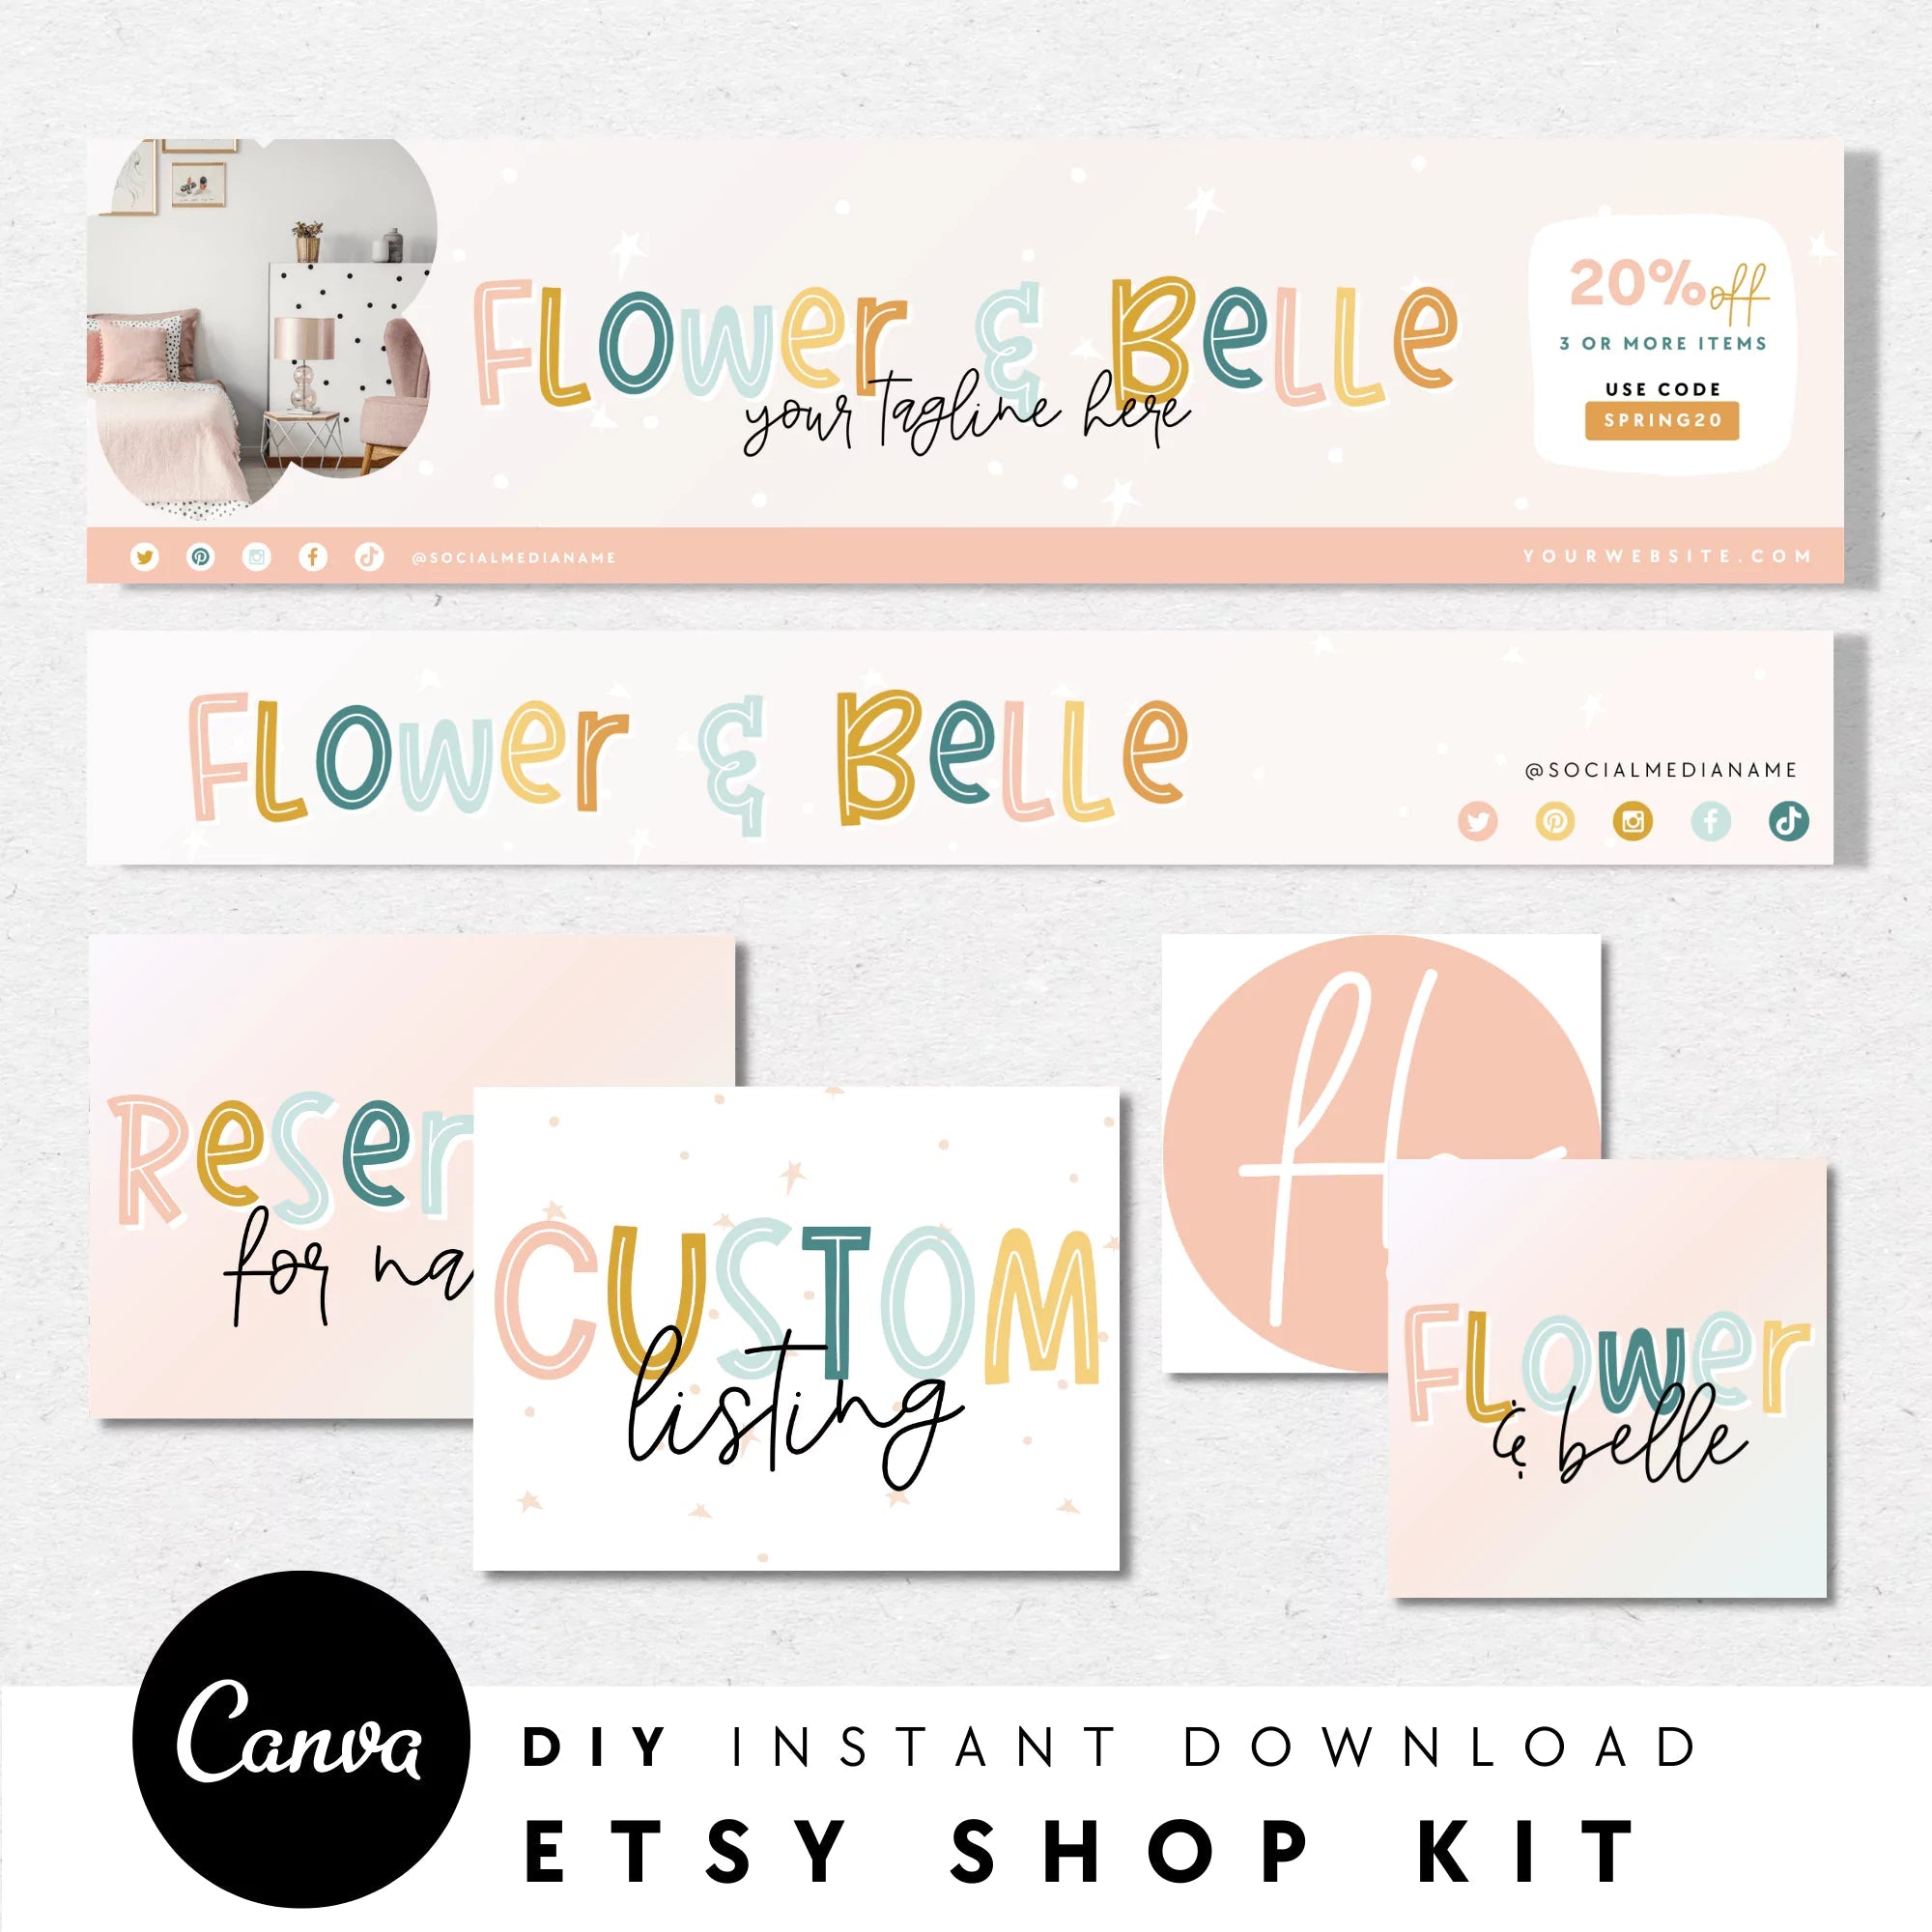 Rainbow Etsy Shop Kit Canva Template | Etsy Banner, Listing Photos, Icon | Bea - Trendy Fox Studio